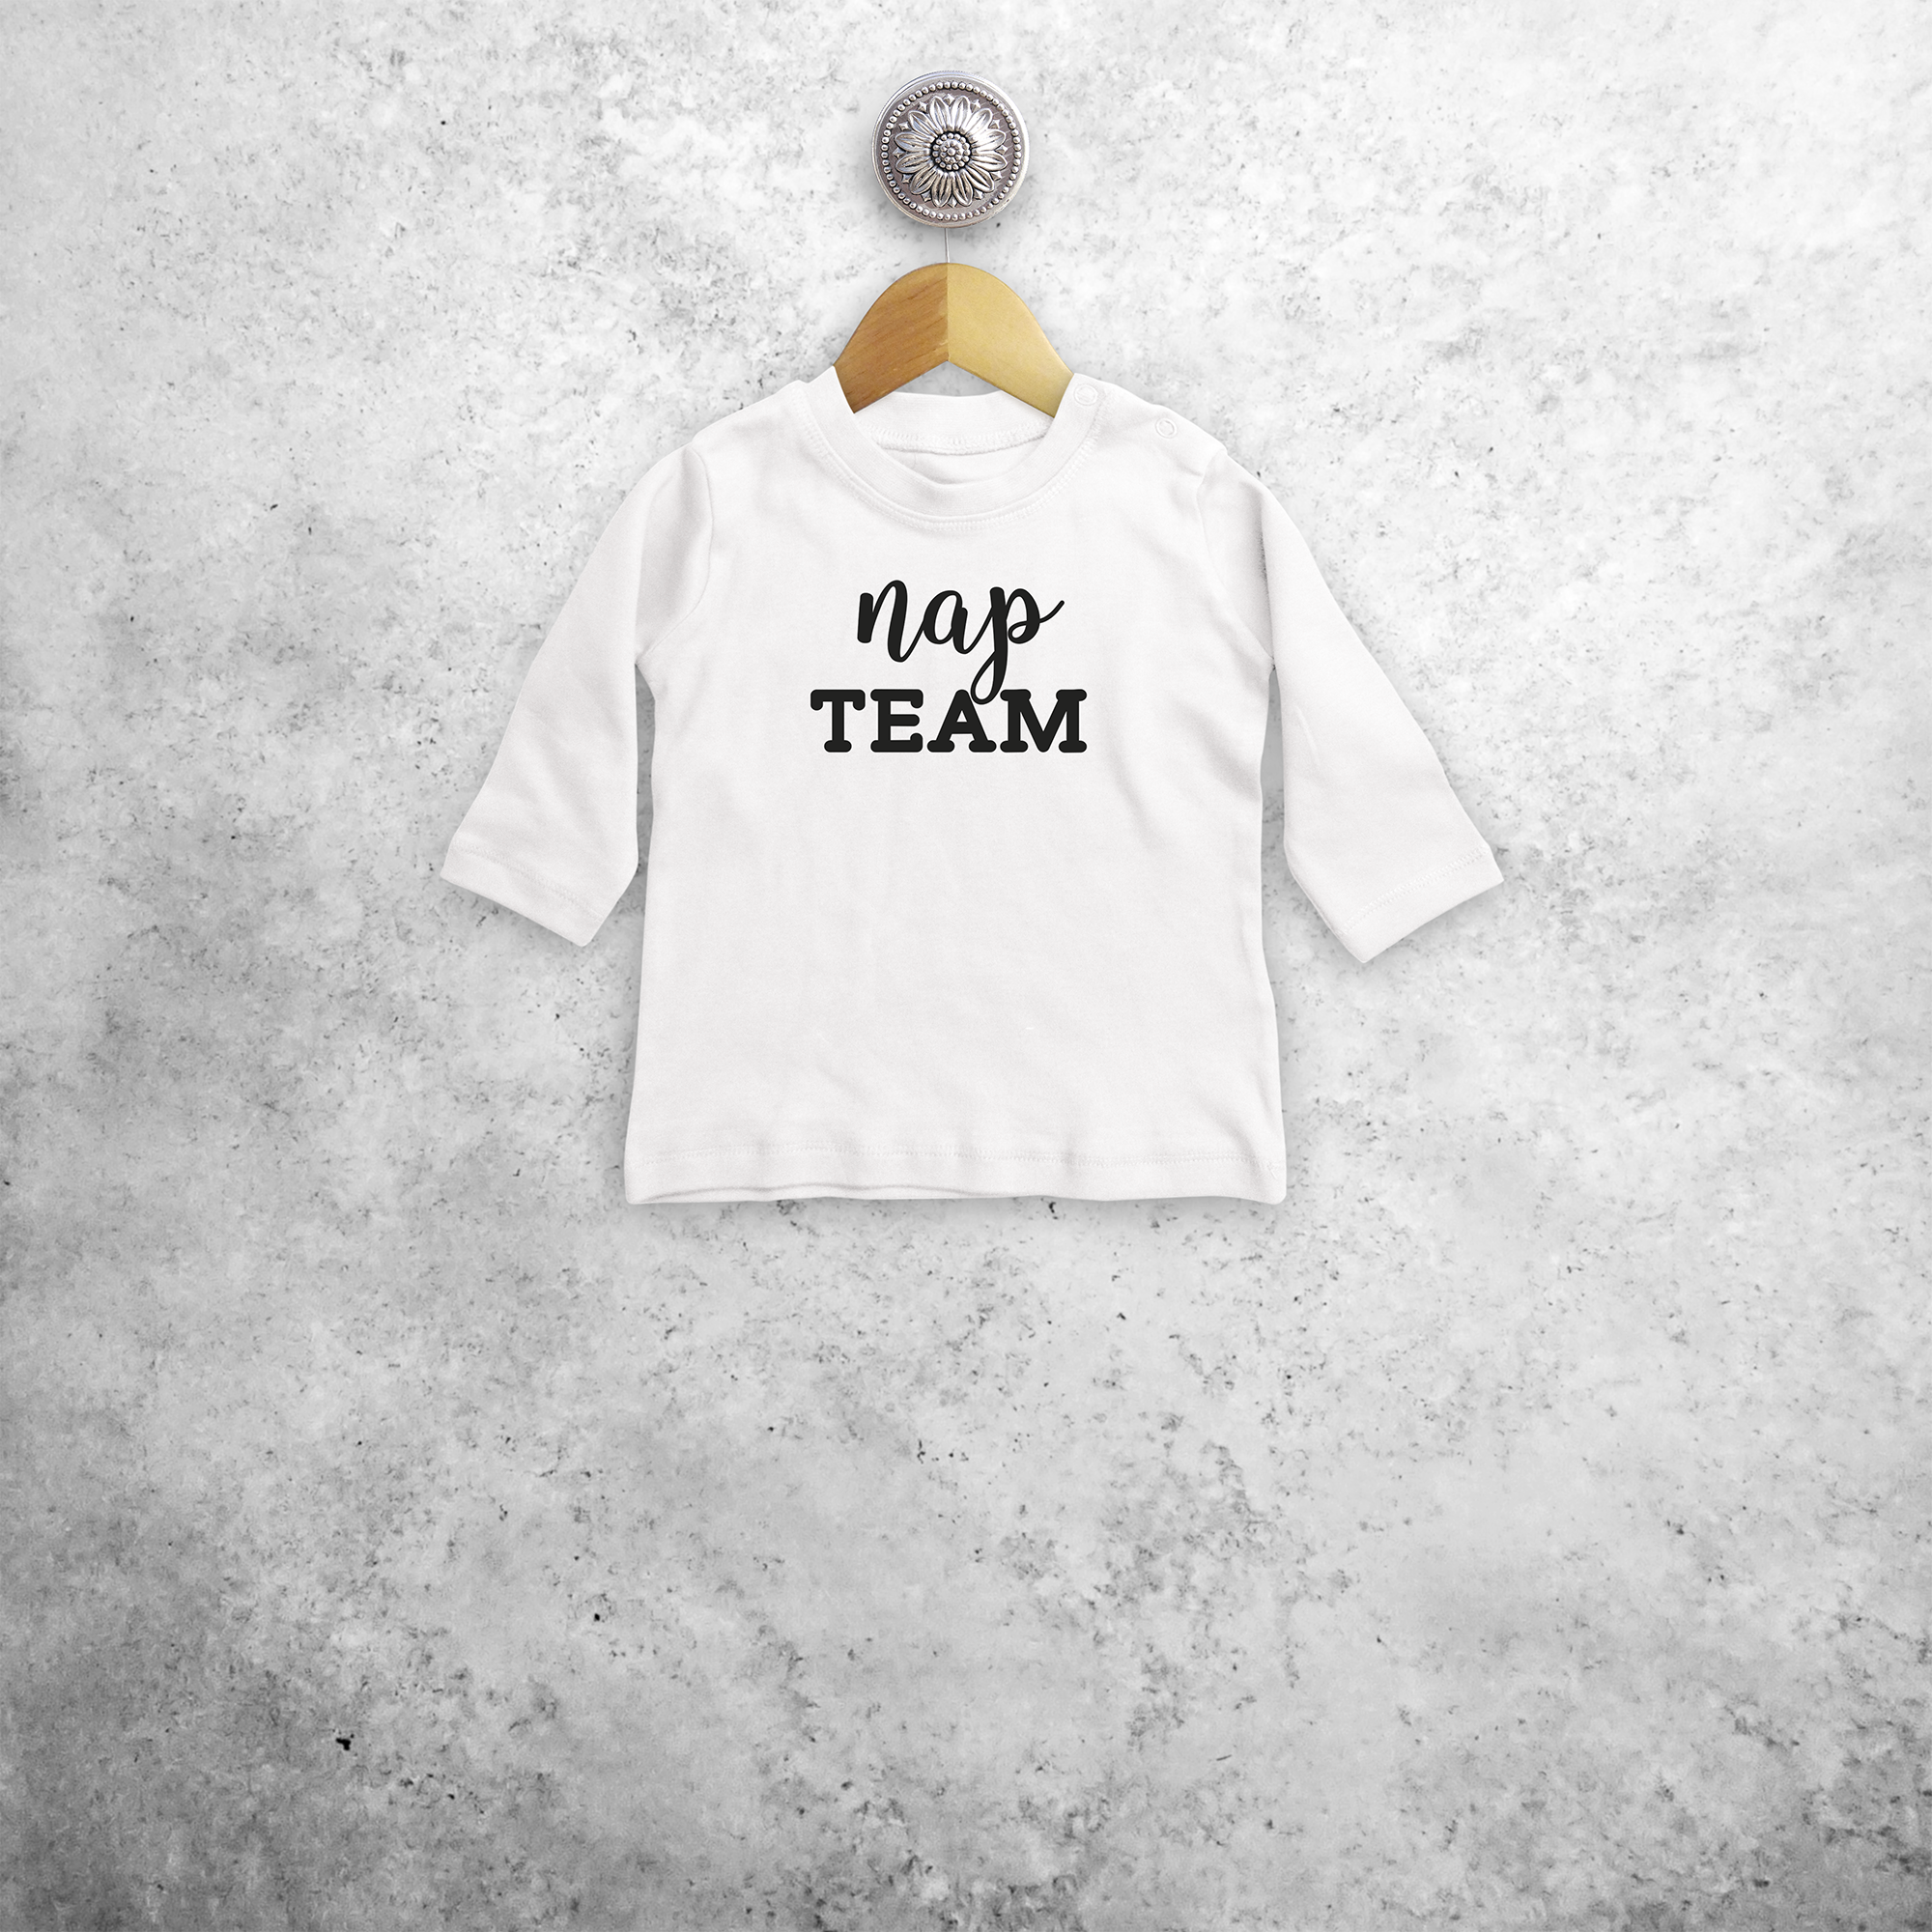 'Nap team' baby longsleeve shirt